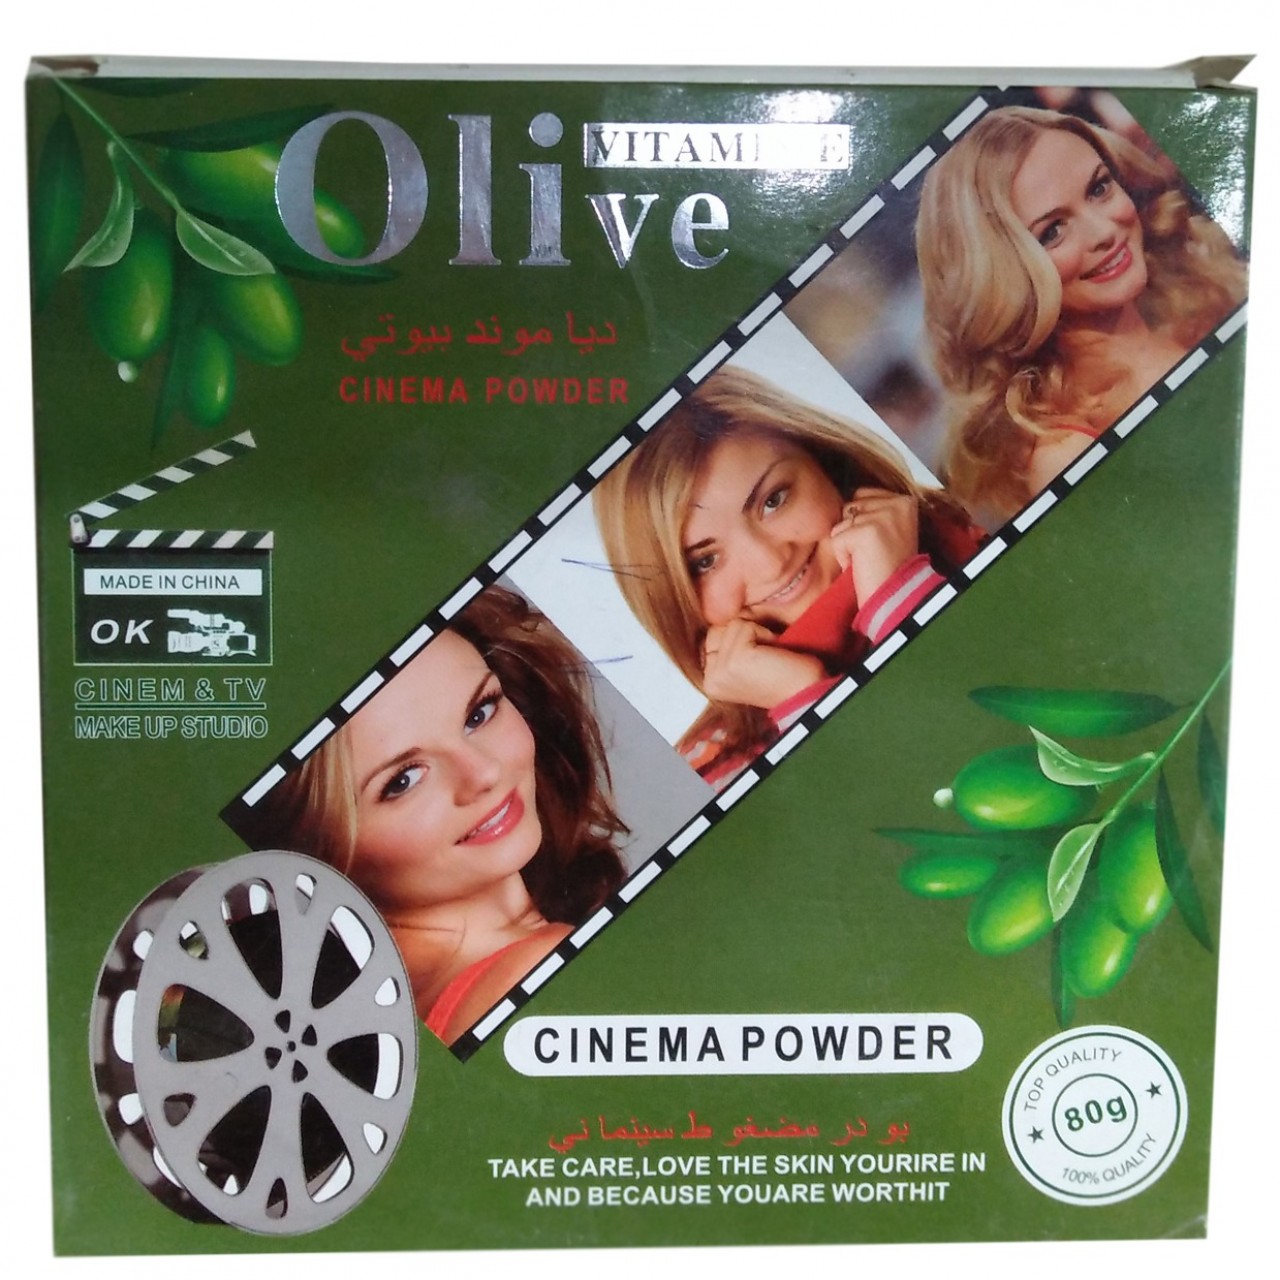 Top Quality Olive Vitamin E Cinema Powder-80 G